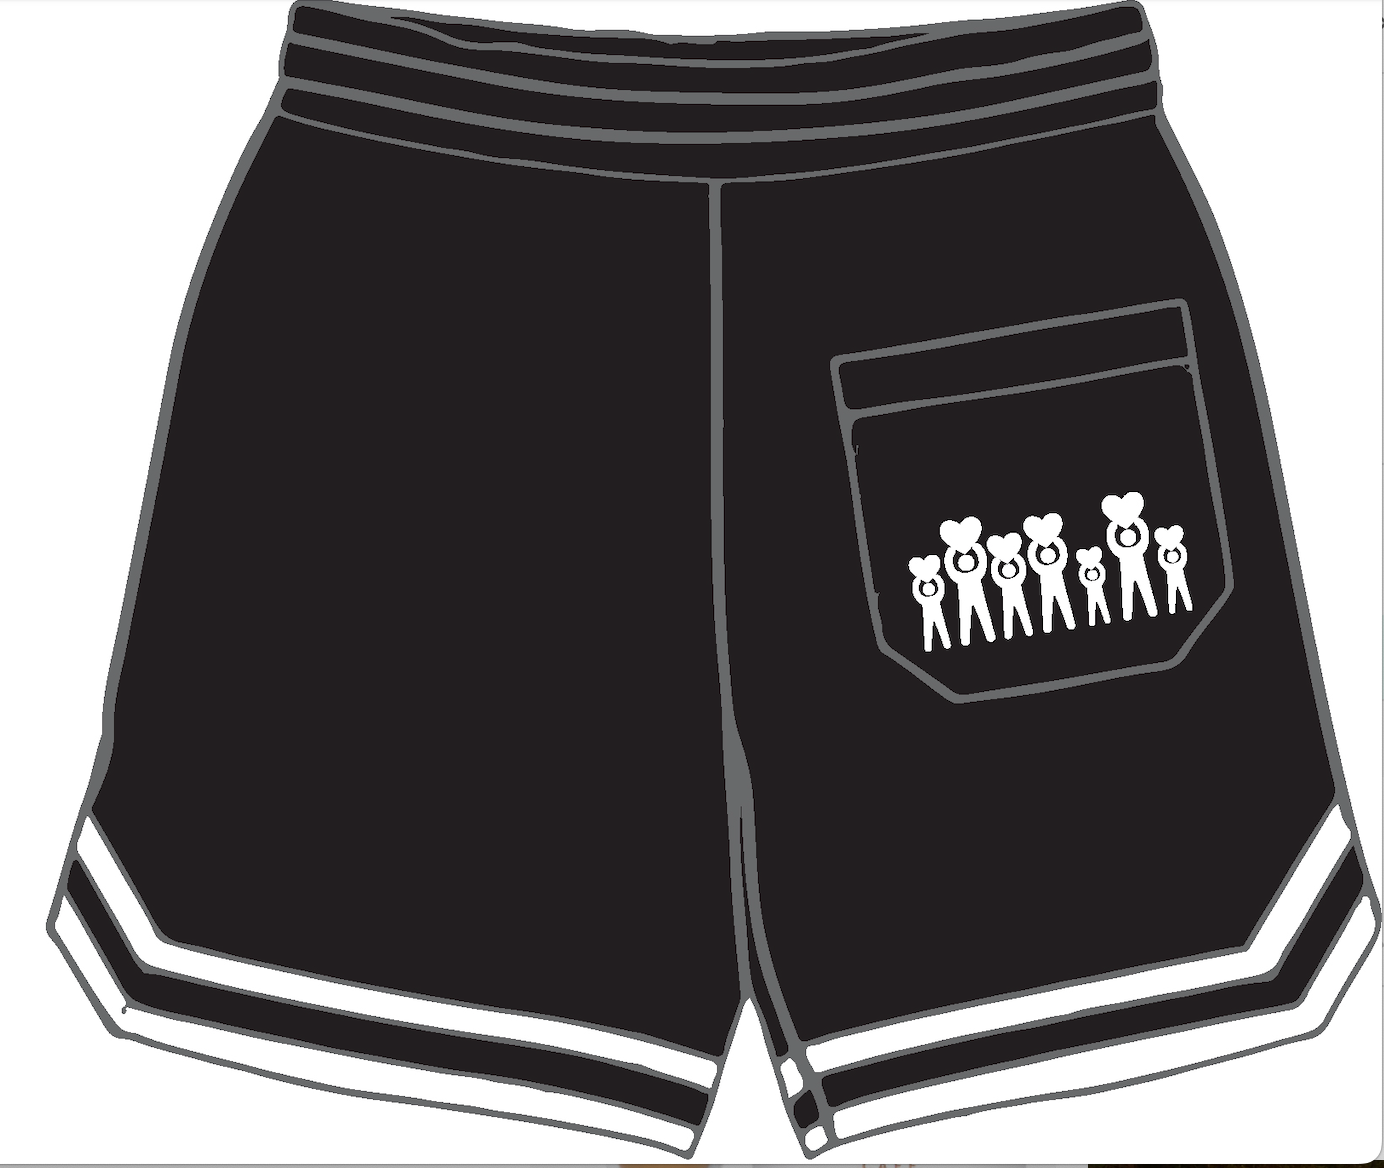 First Edition AC3 Black Mesh Shorts